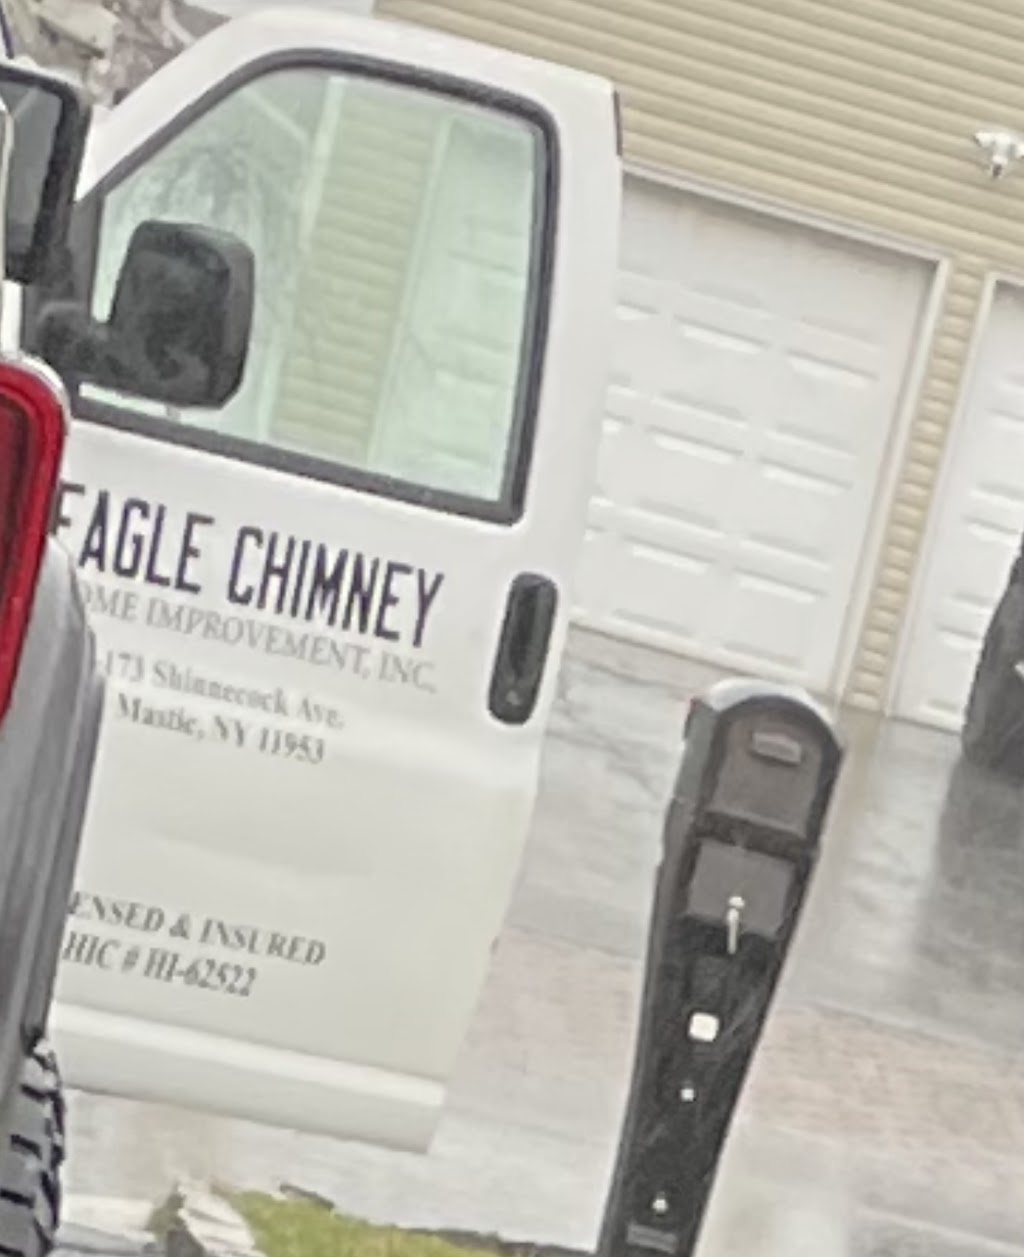 Eagle Chimney & Home Improvement, Inc. | 17 Miller Place Yaphank Rd, Middle Island, NY 11953 | Phone: (631) 525-3113